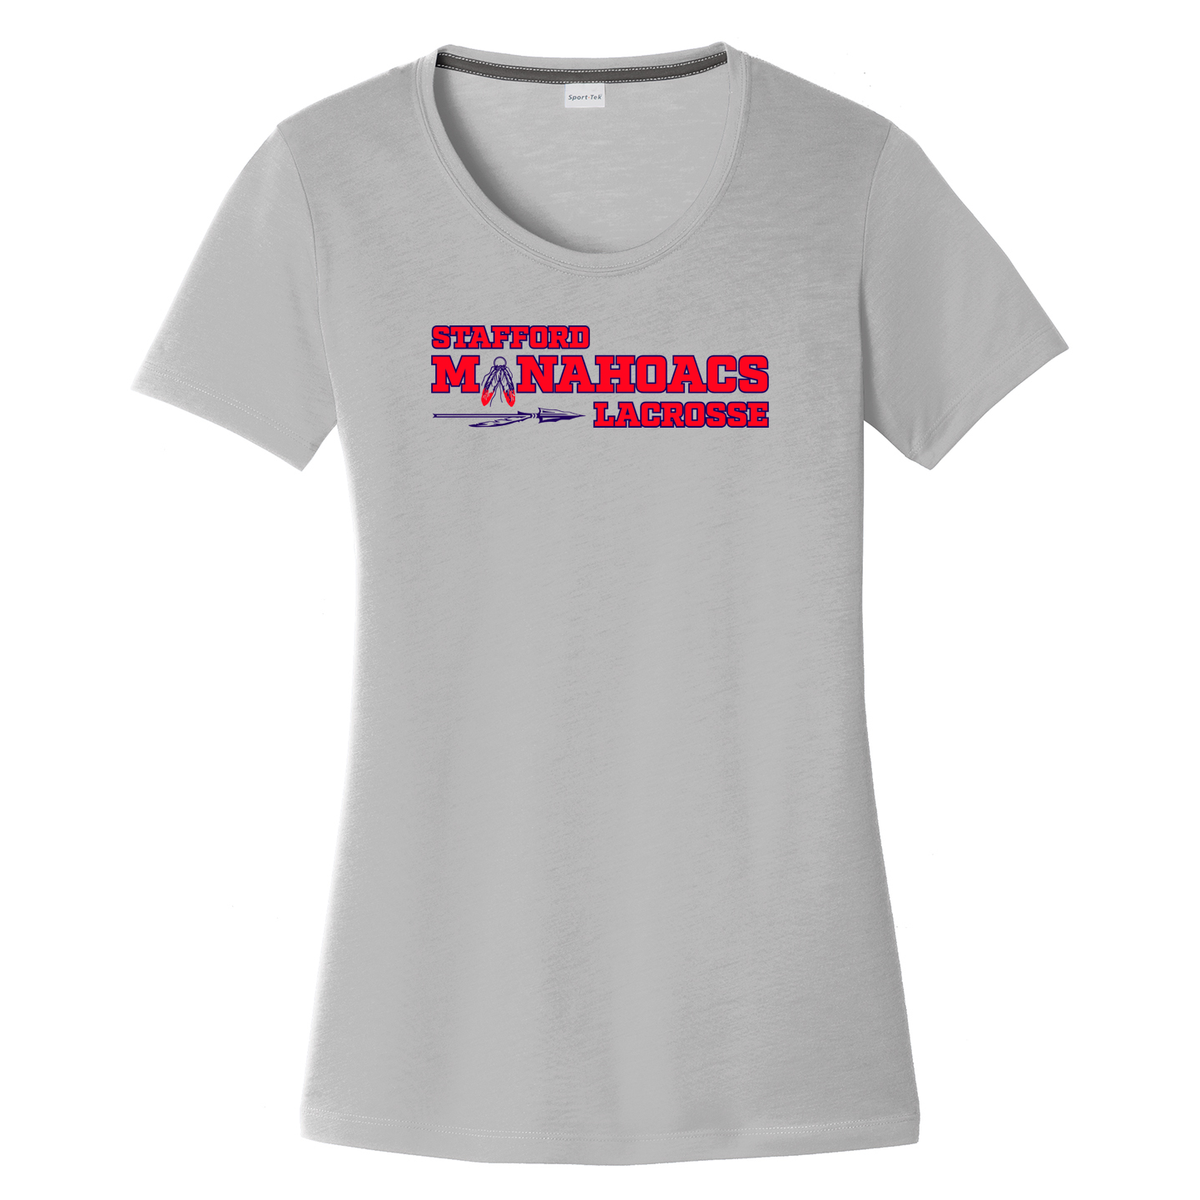 Stafford Lacrosse Women's CottonTouch Performance T-Shirt